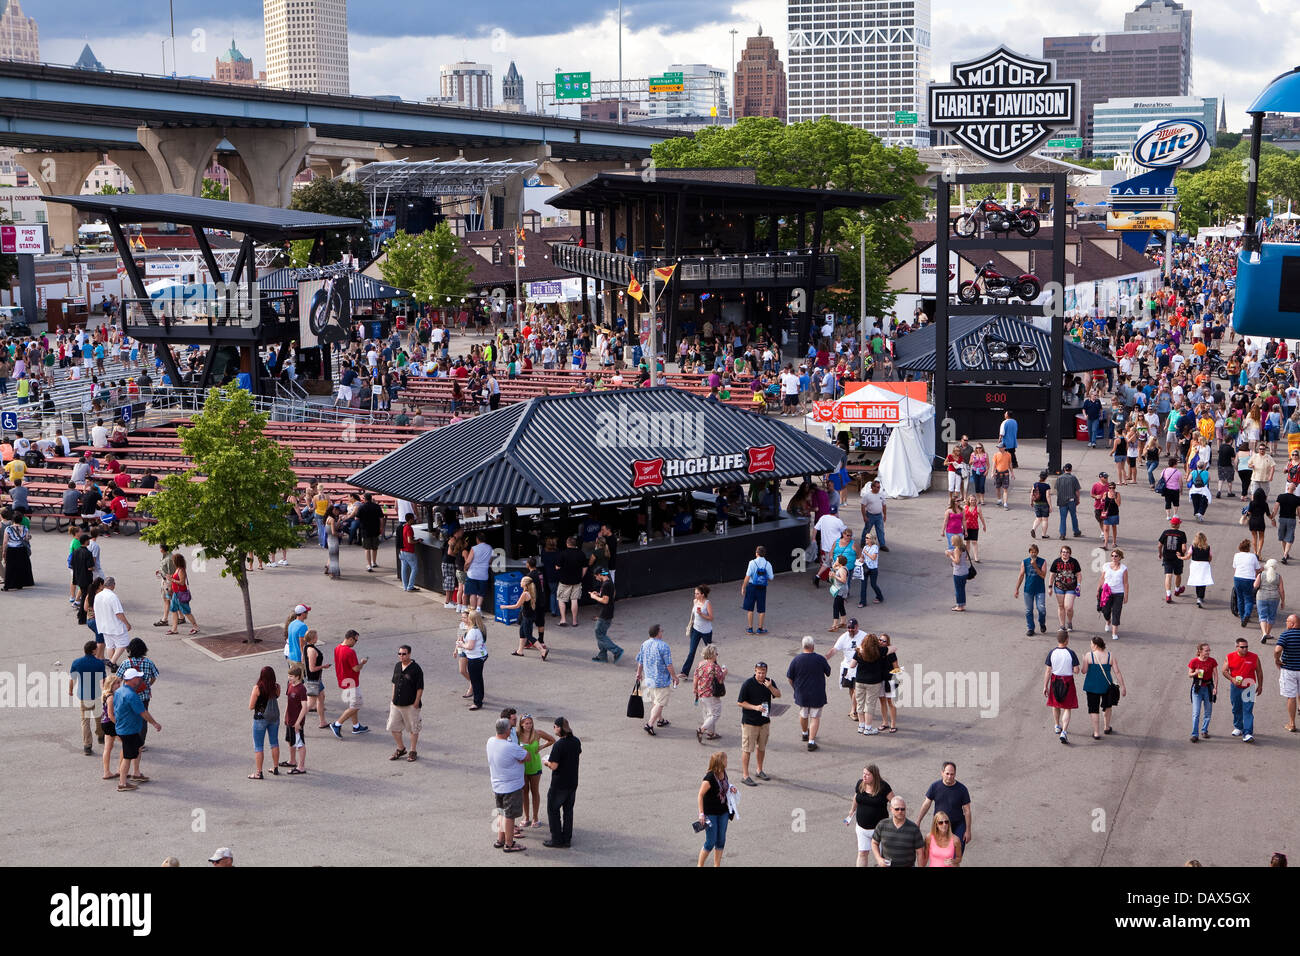 La Harley-Davidson Roadhouse stadio è visto sul Henry W. Maier Festival Park (Summerfest Grounds) in Milwaukee Foto Stock